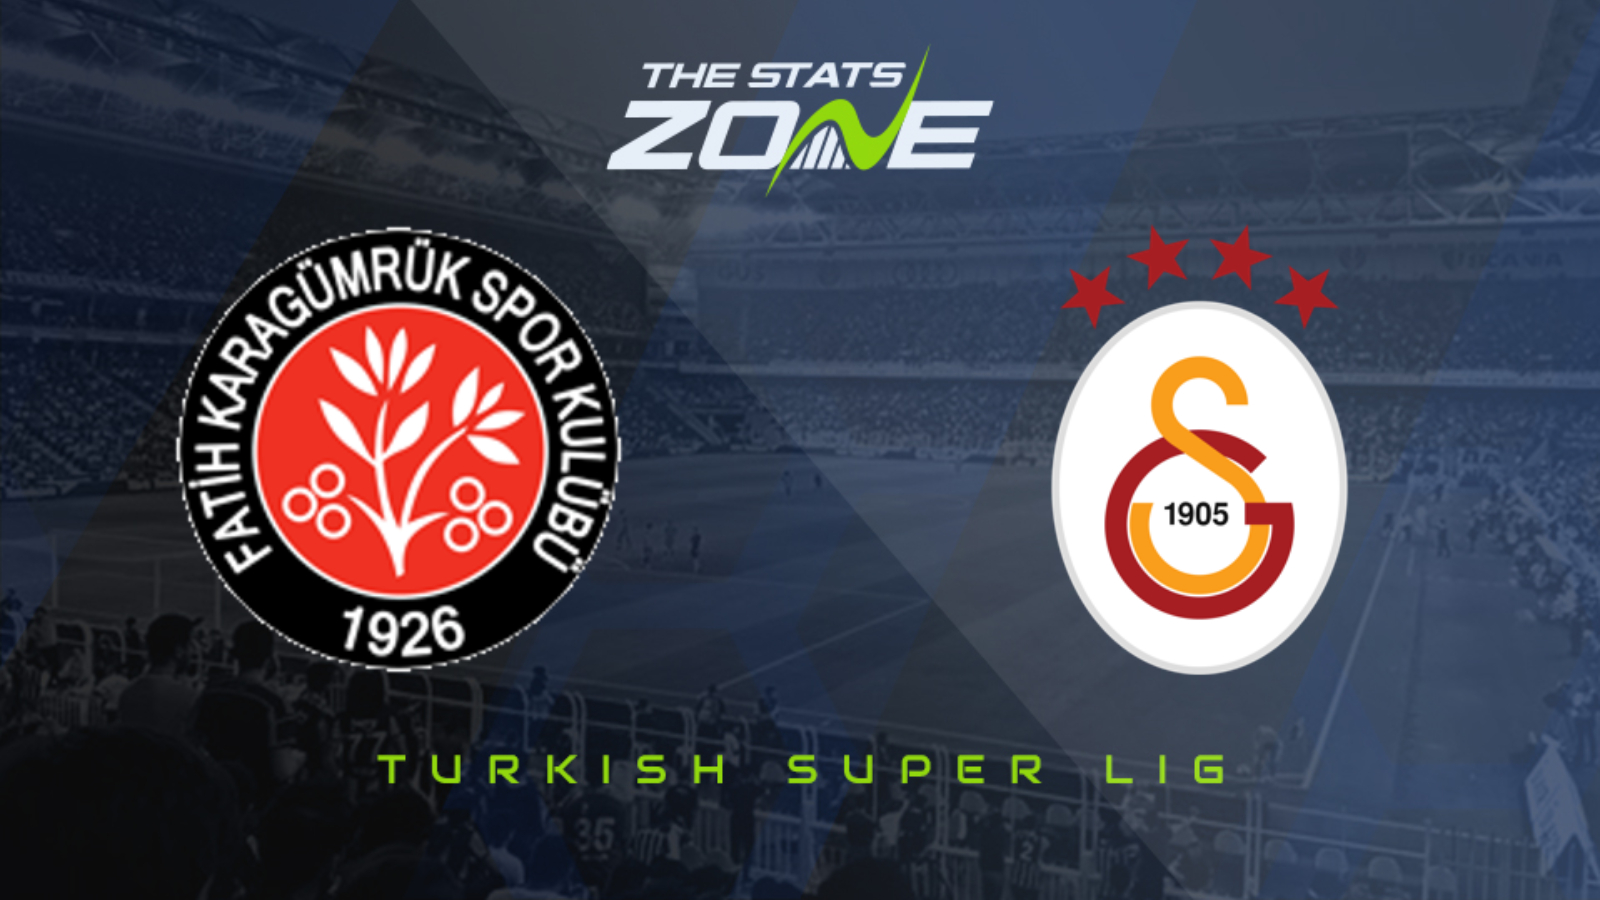 Прогноз на матч галатасарай фатих. Galatasaray vs PSG. Turkey super Lig 202/23. Система подогрева для зрителей Галатасарай. Super Turk.